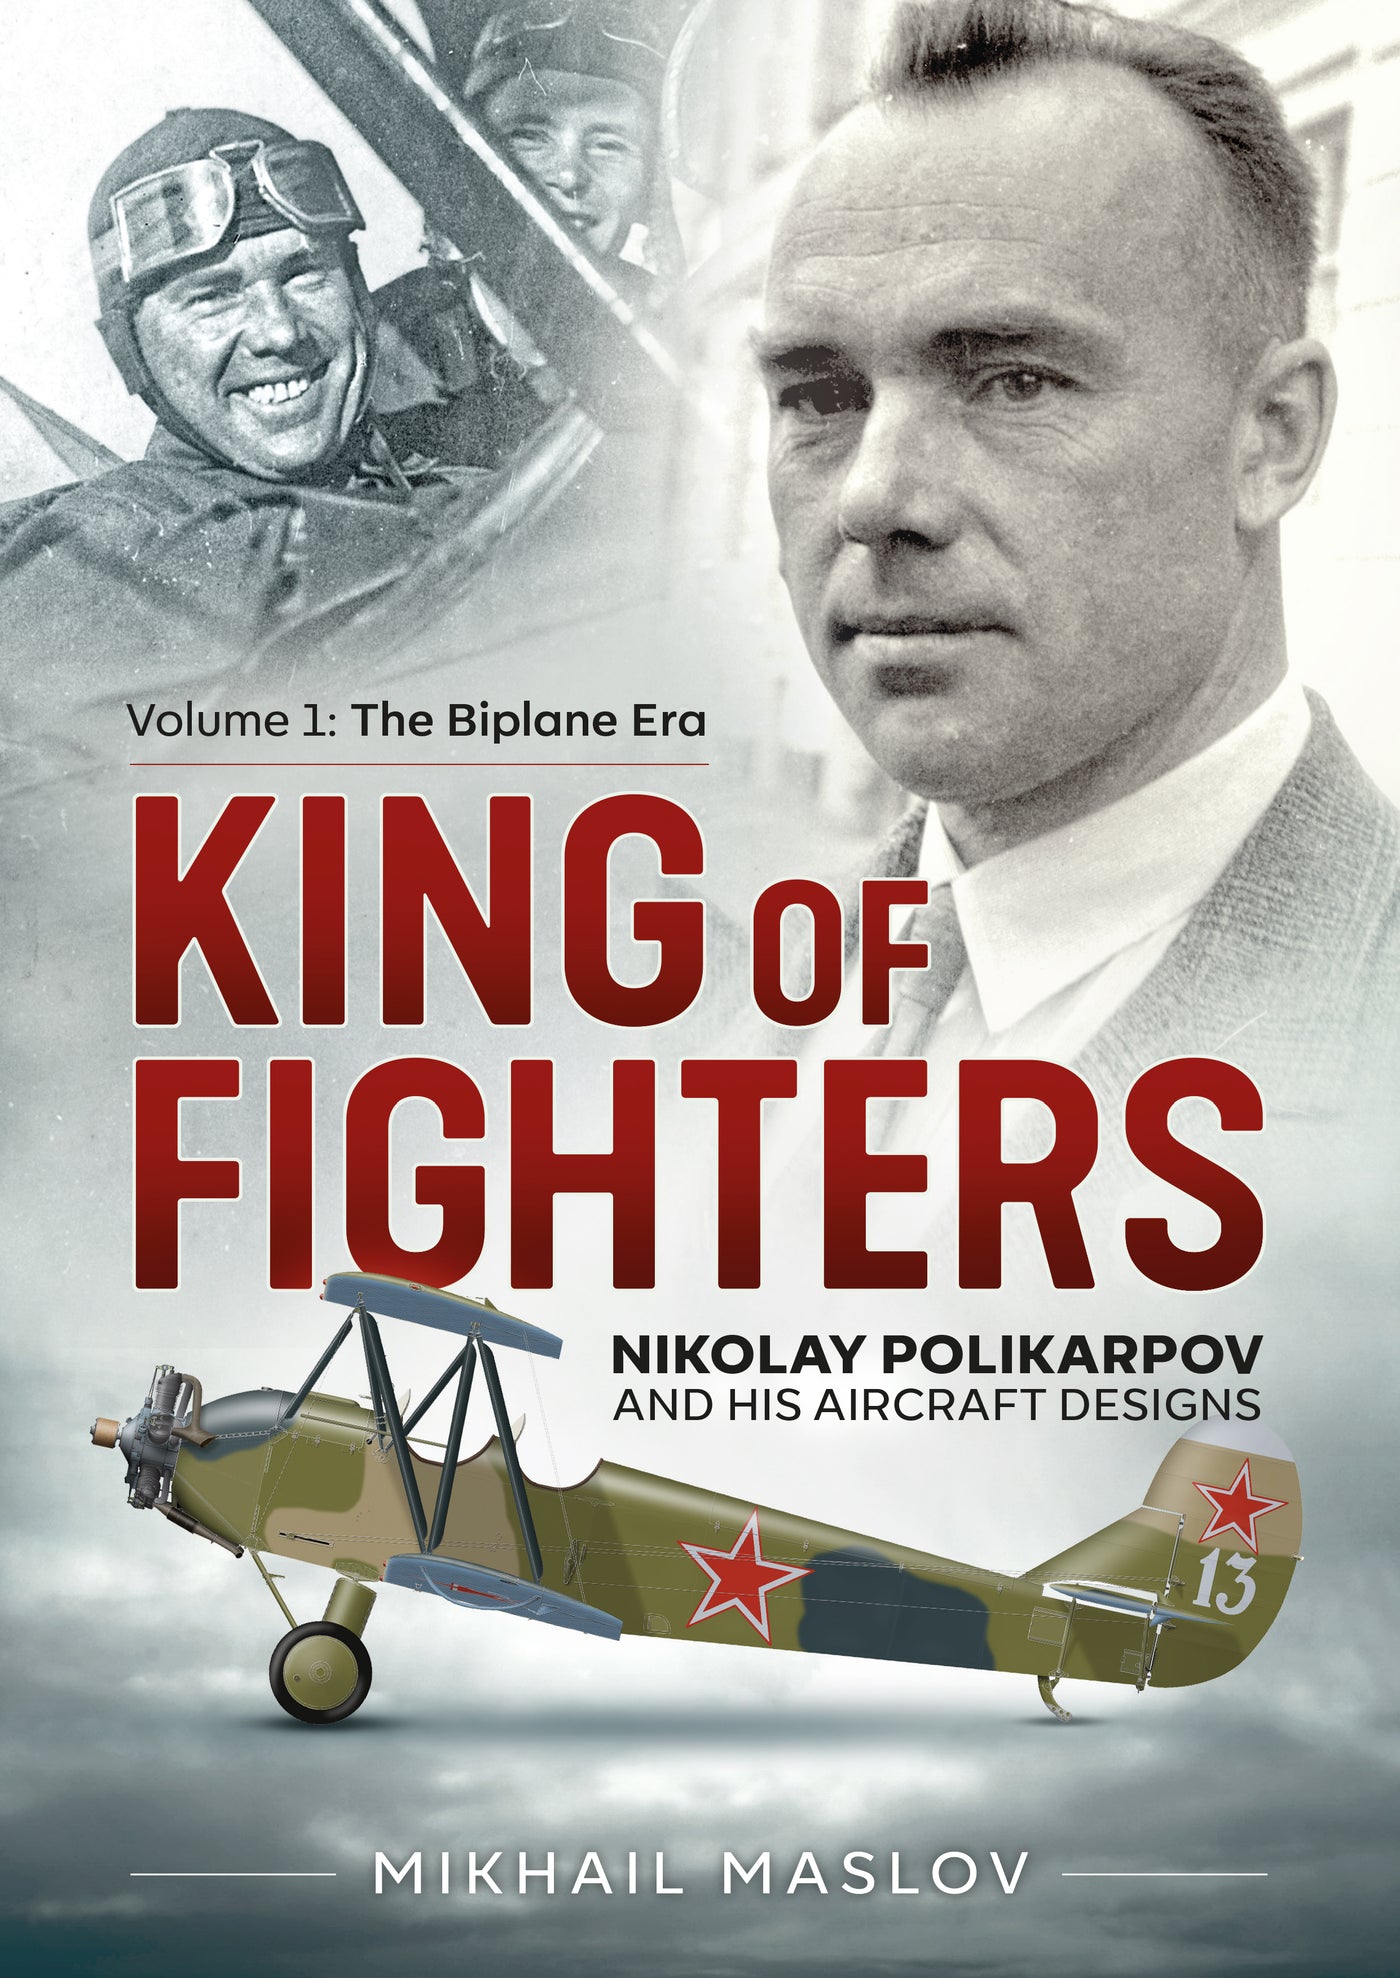 King of Fighters: Nikolay Polikarpov and his Aircraft Designs